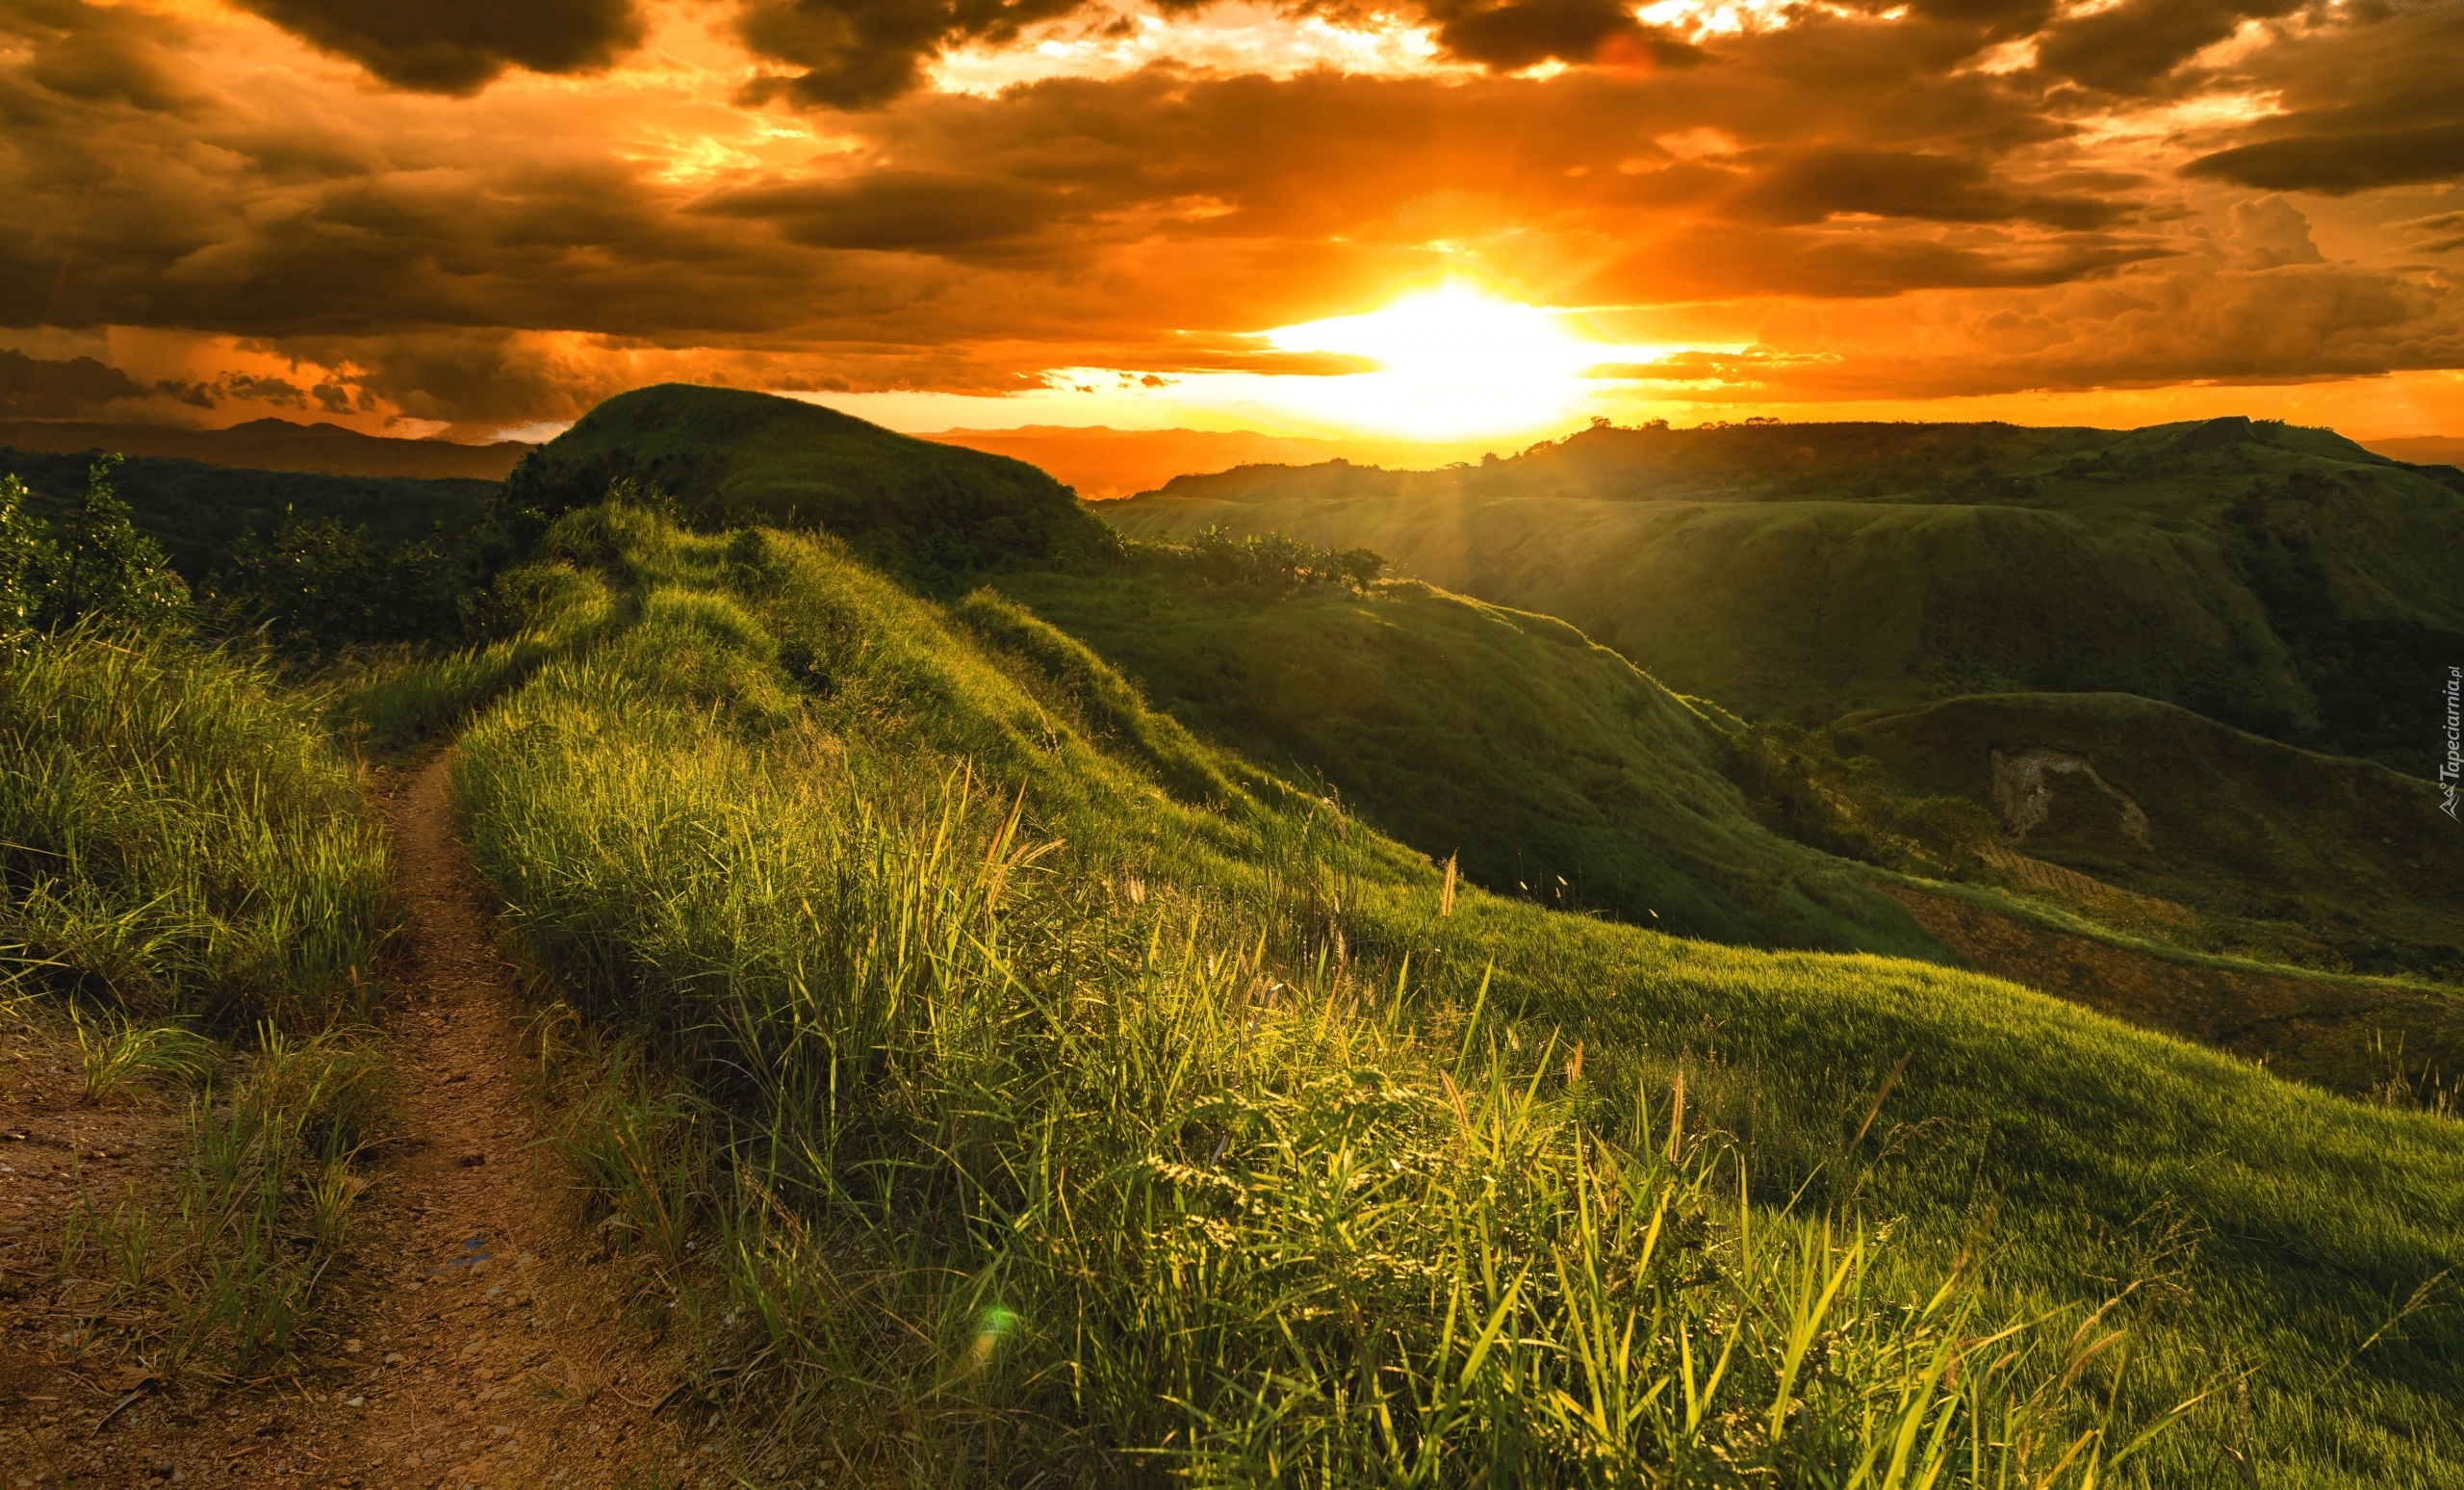 Pole, Zachód słońca, Ścieżka, Chmury, Filipiny